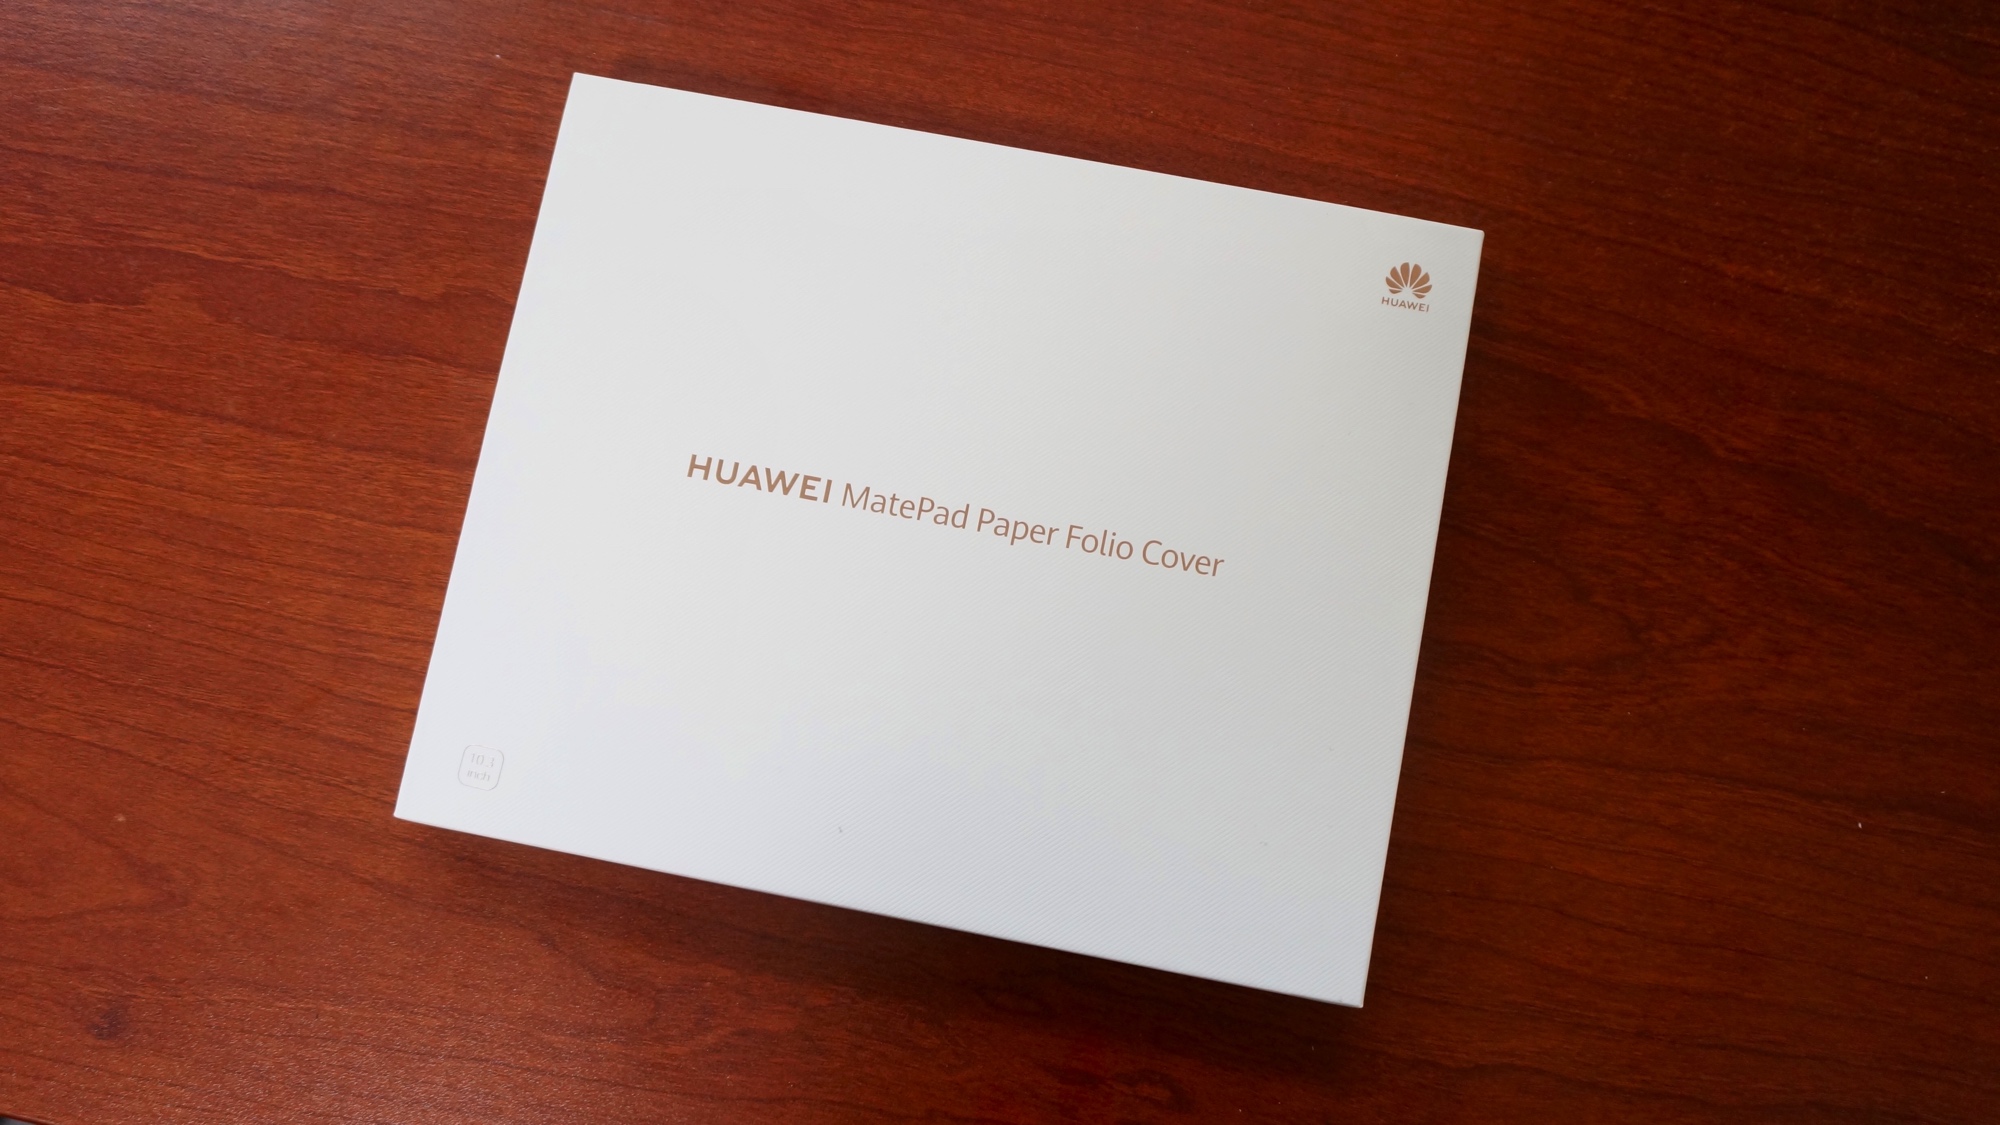 MatePad Paper Folio Cover Box